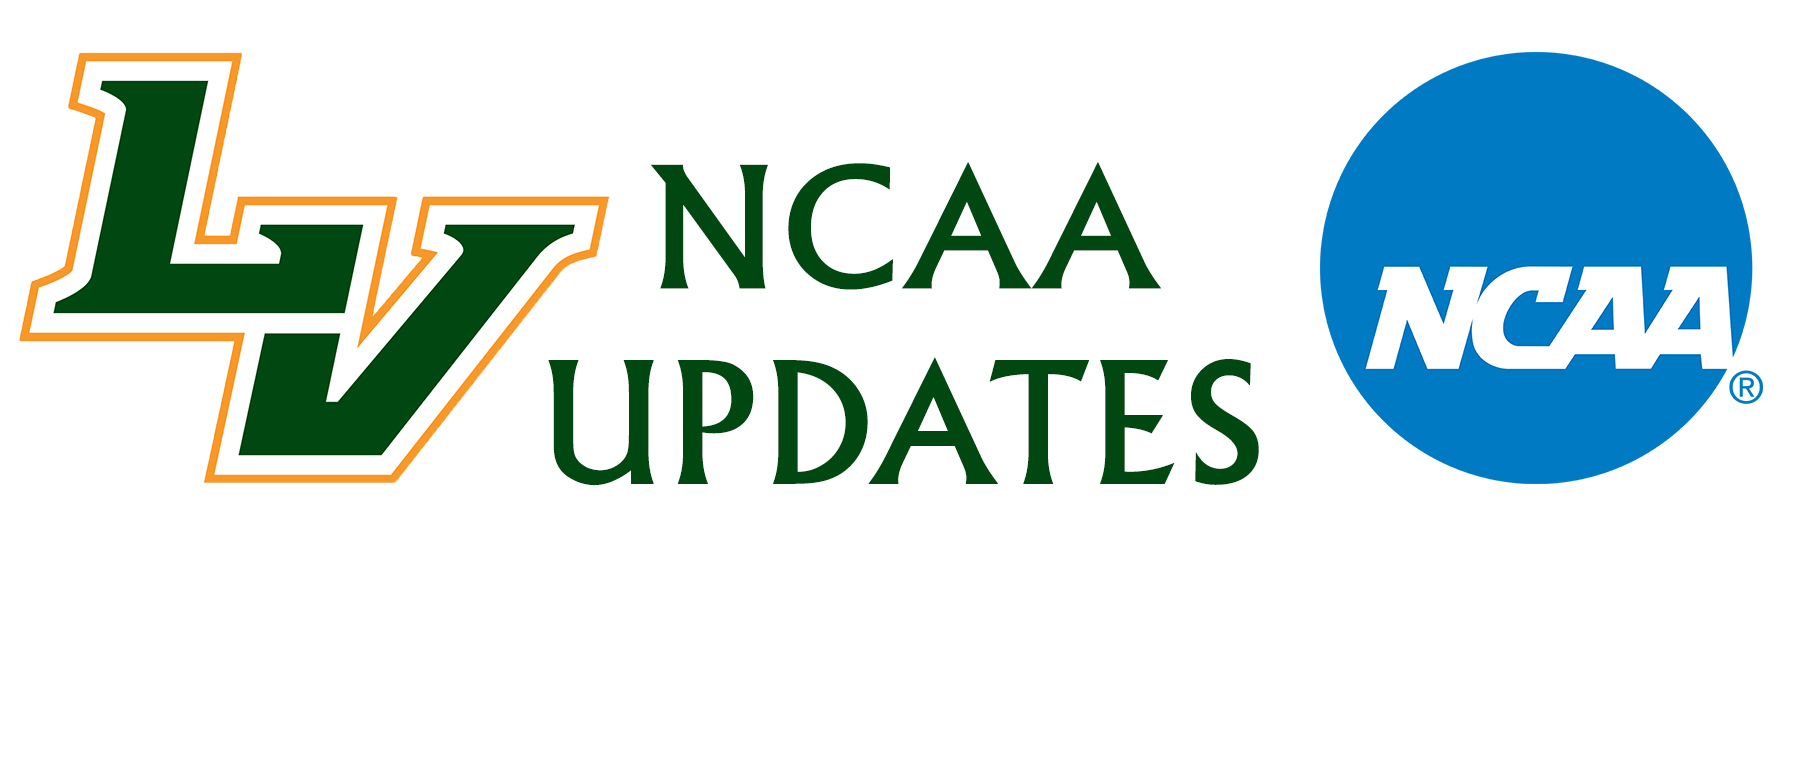 Important NCAA Updates